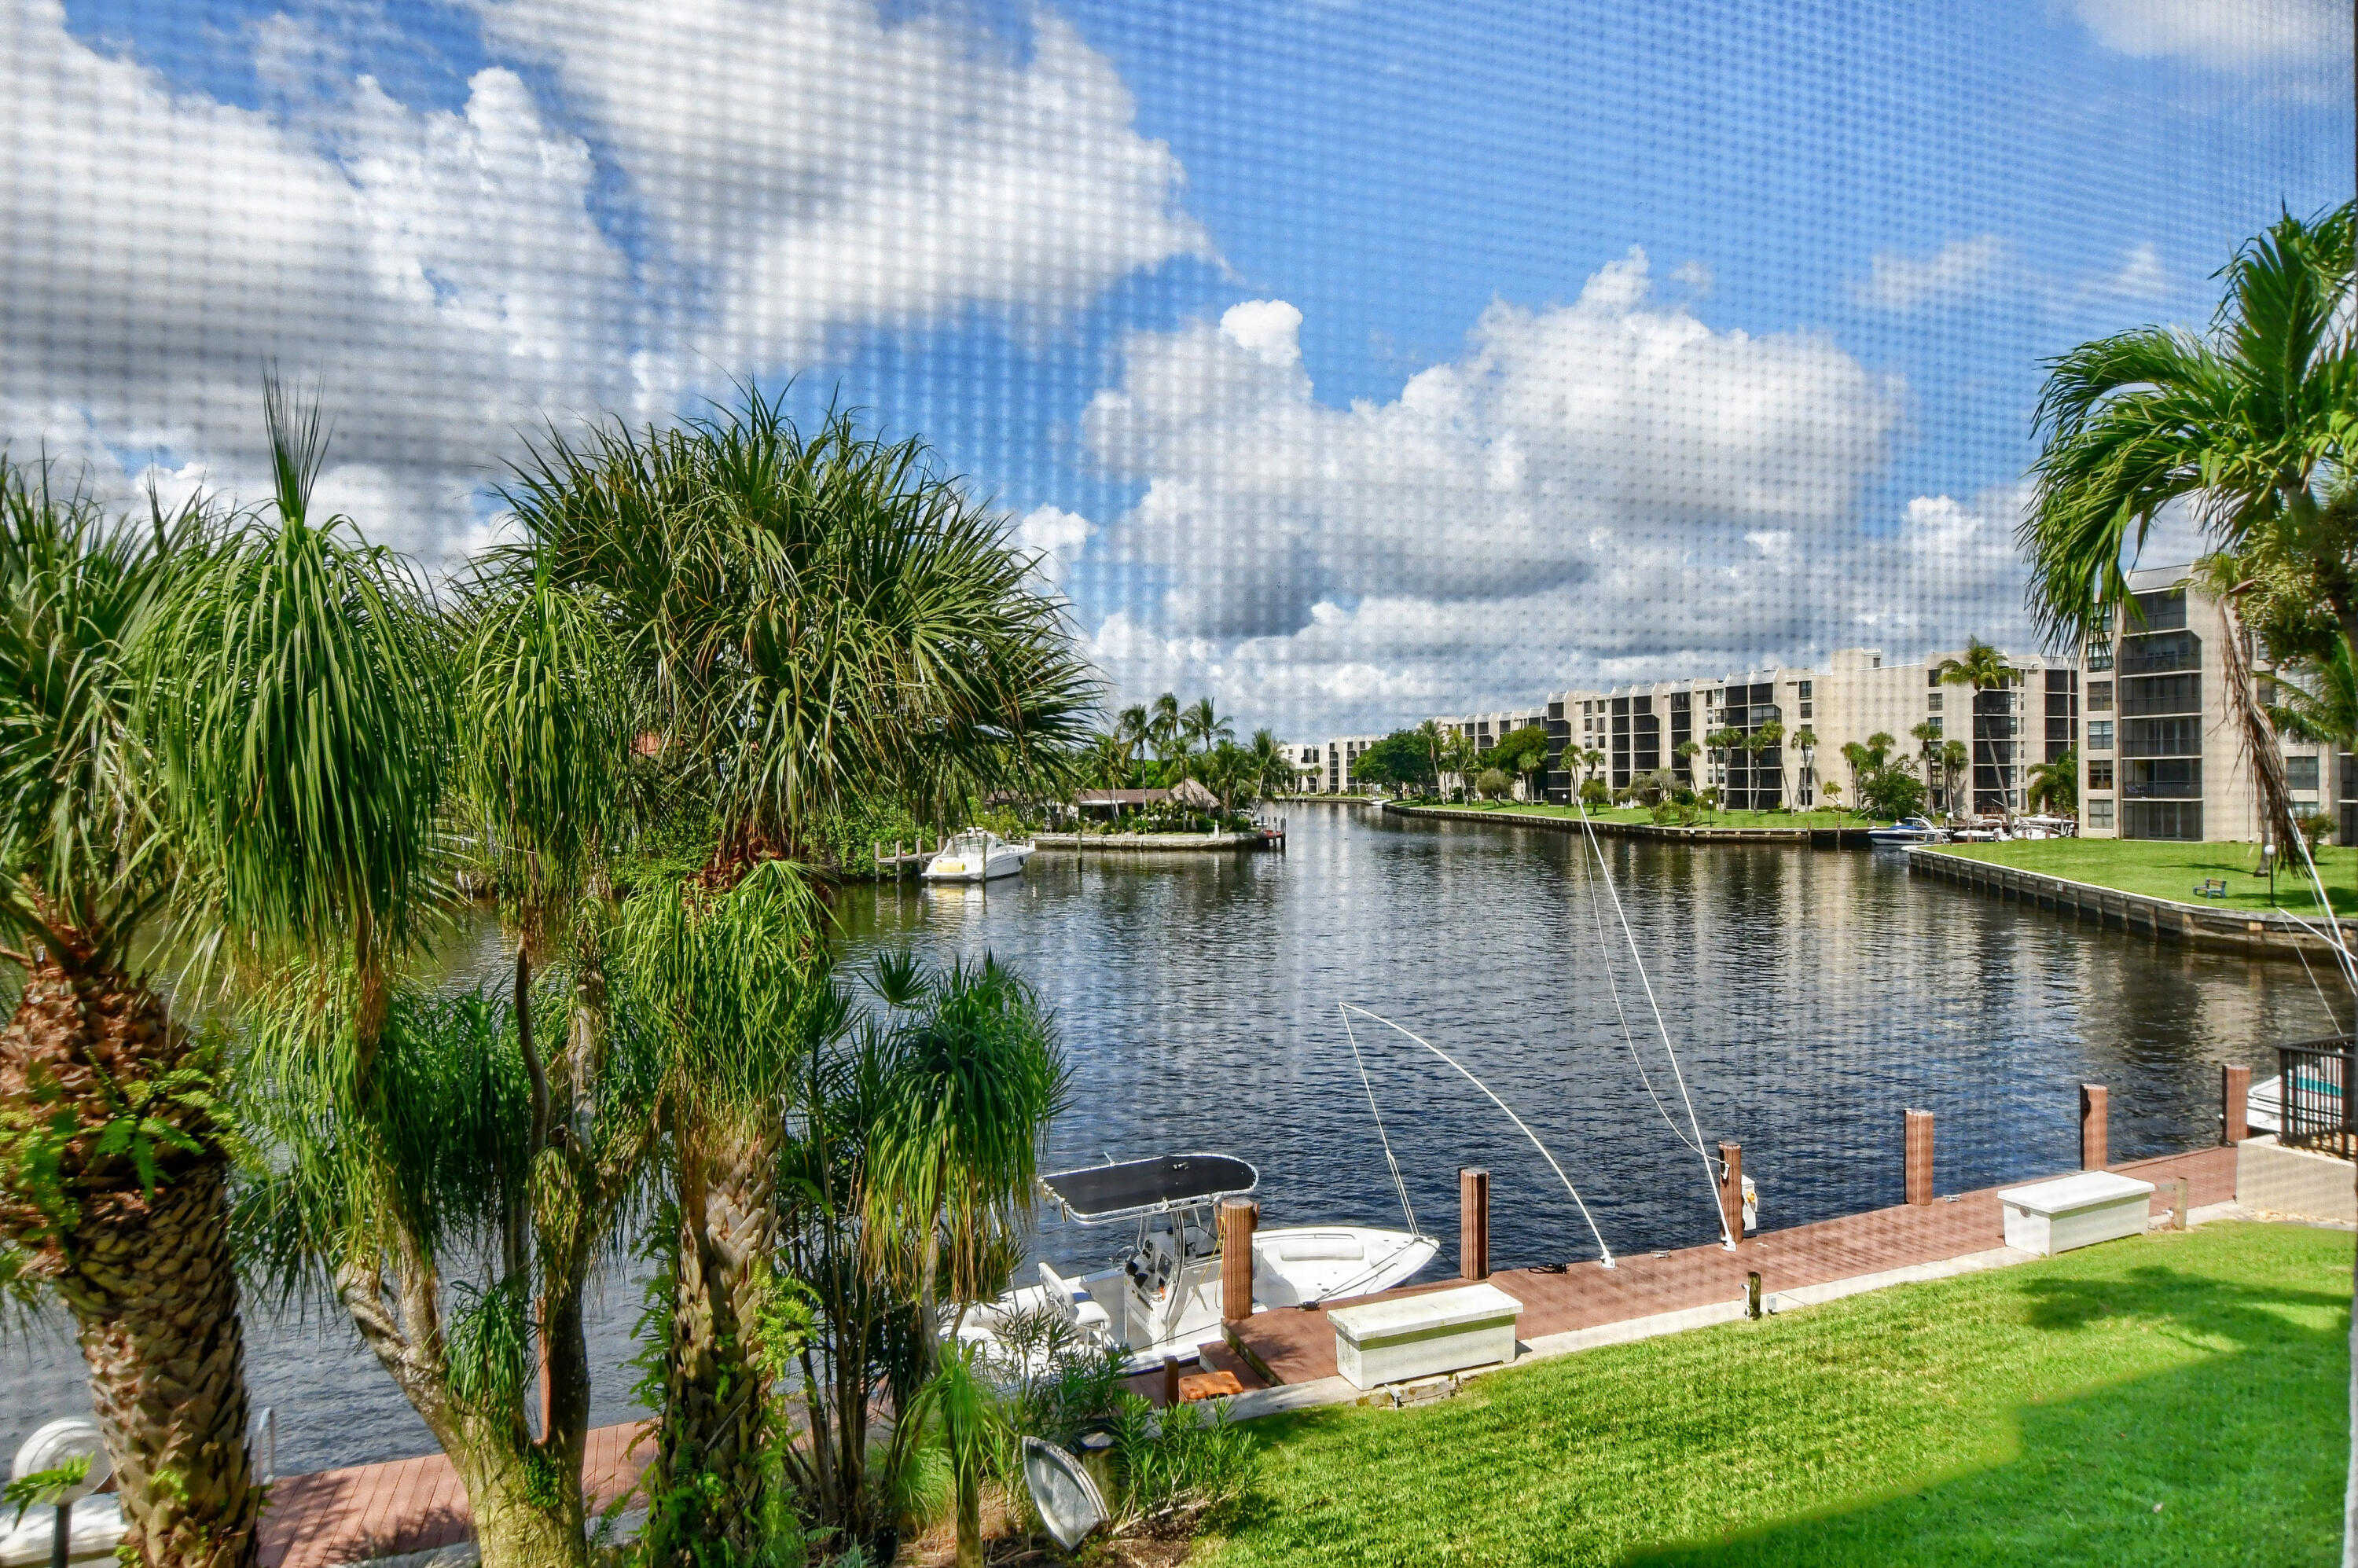 View Boca Raton, FL 33432 residential property